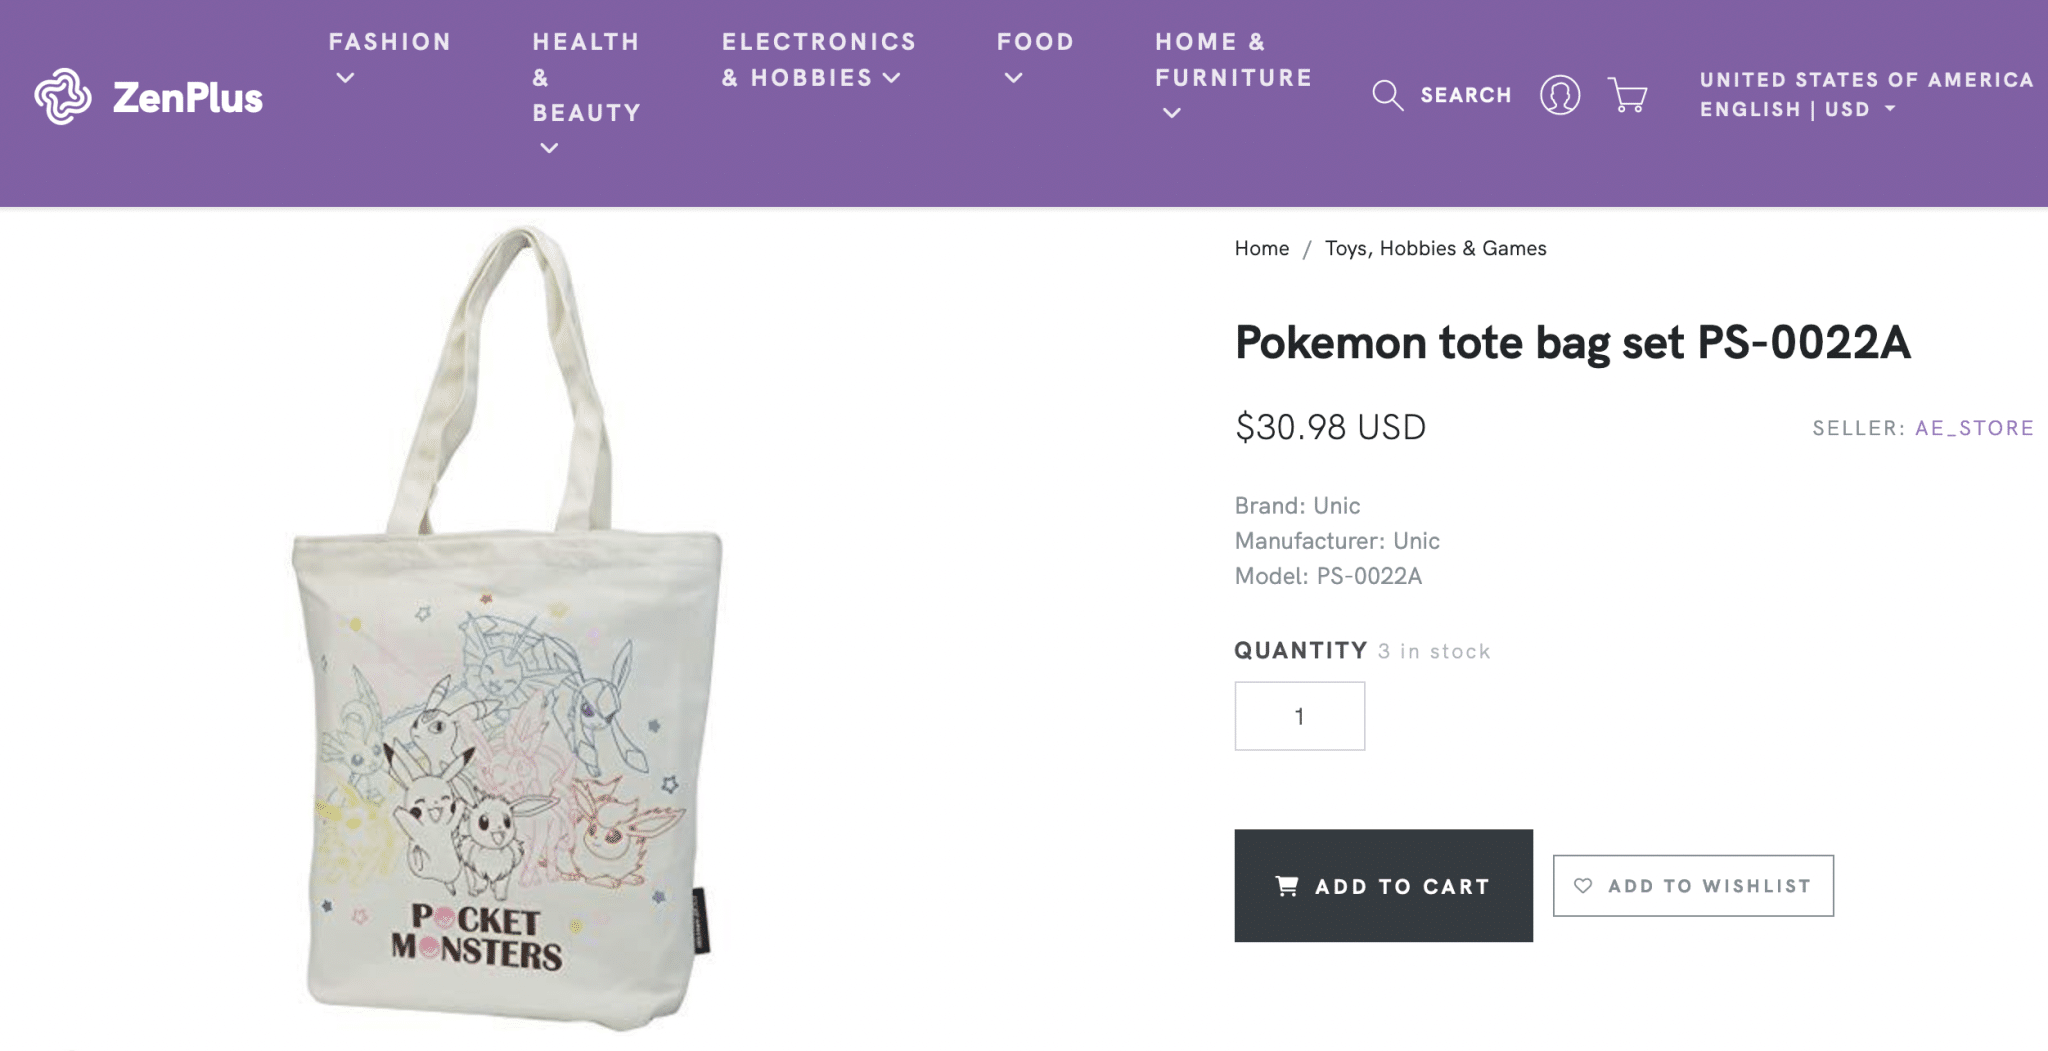 Pocket Monsters (Pokémon) tote bag